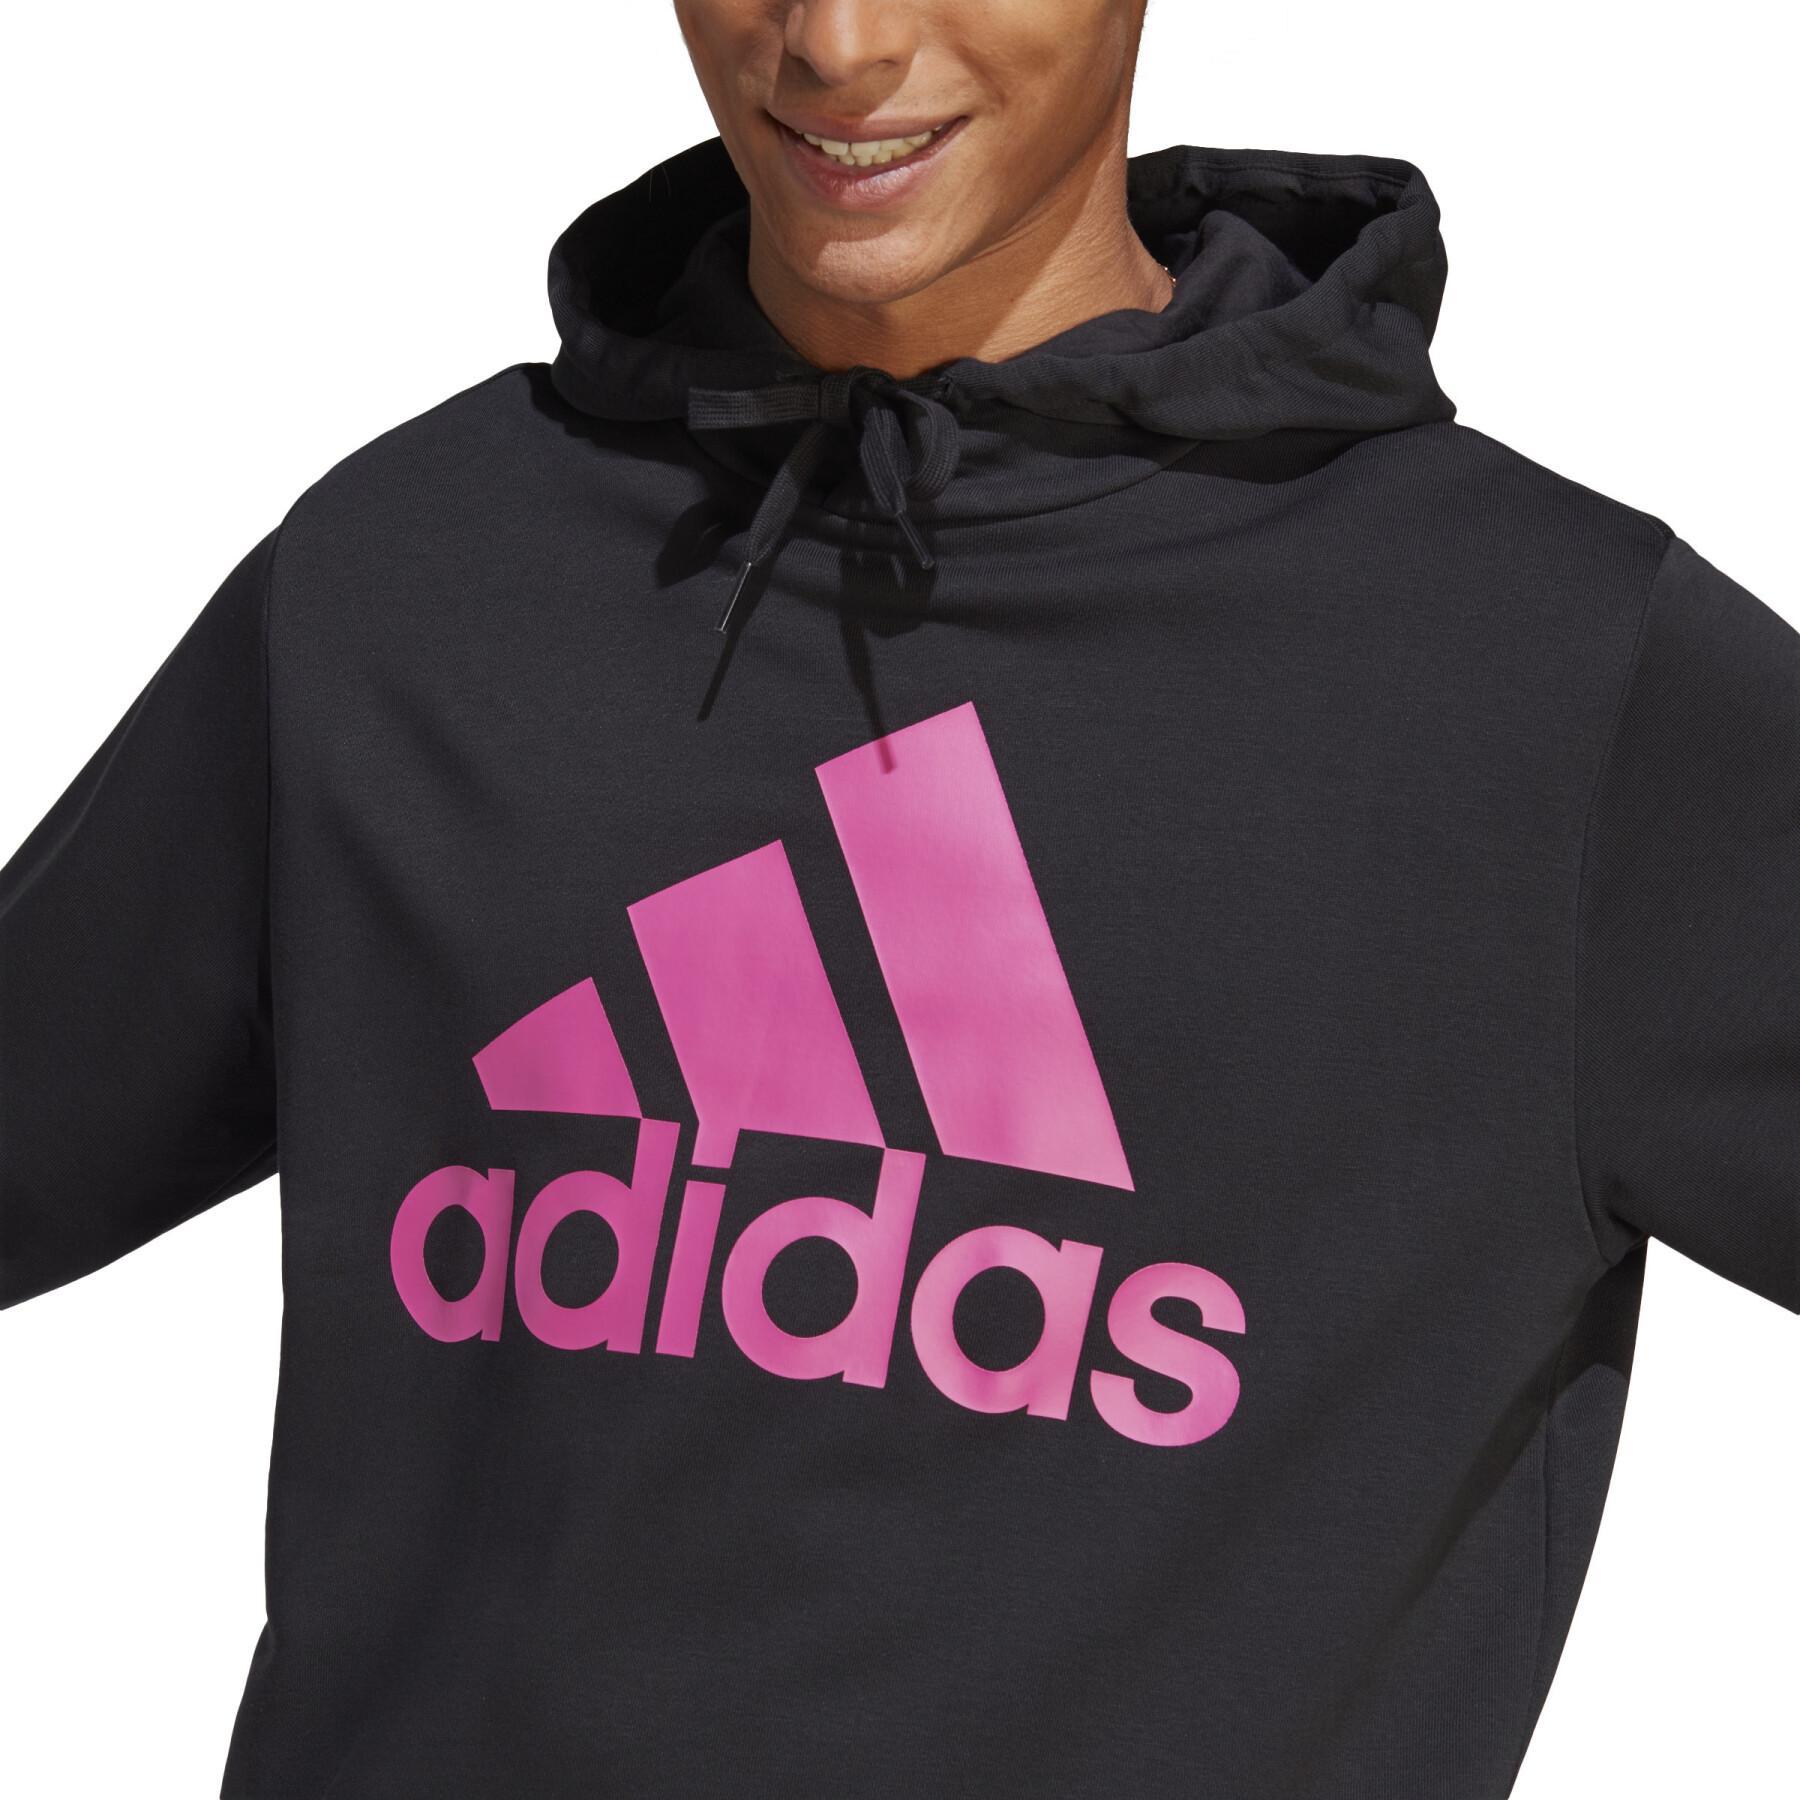 Groot fleece trainingspak met logo adidas